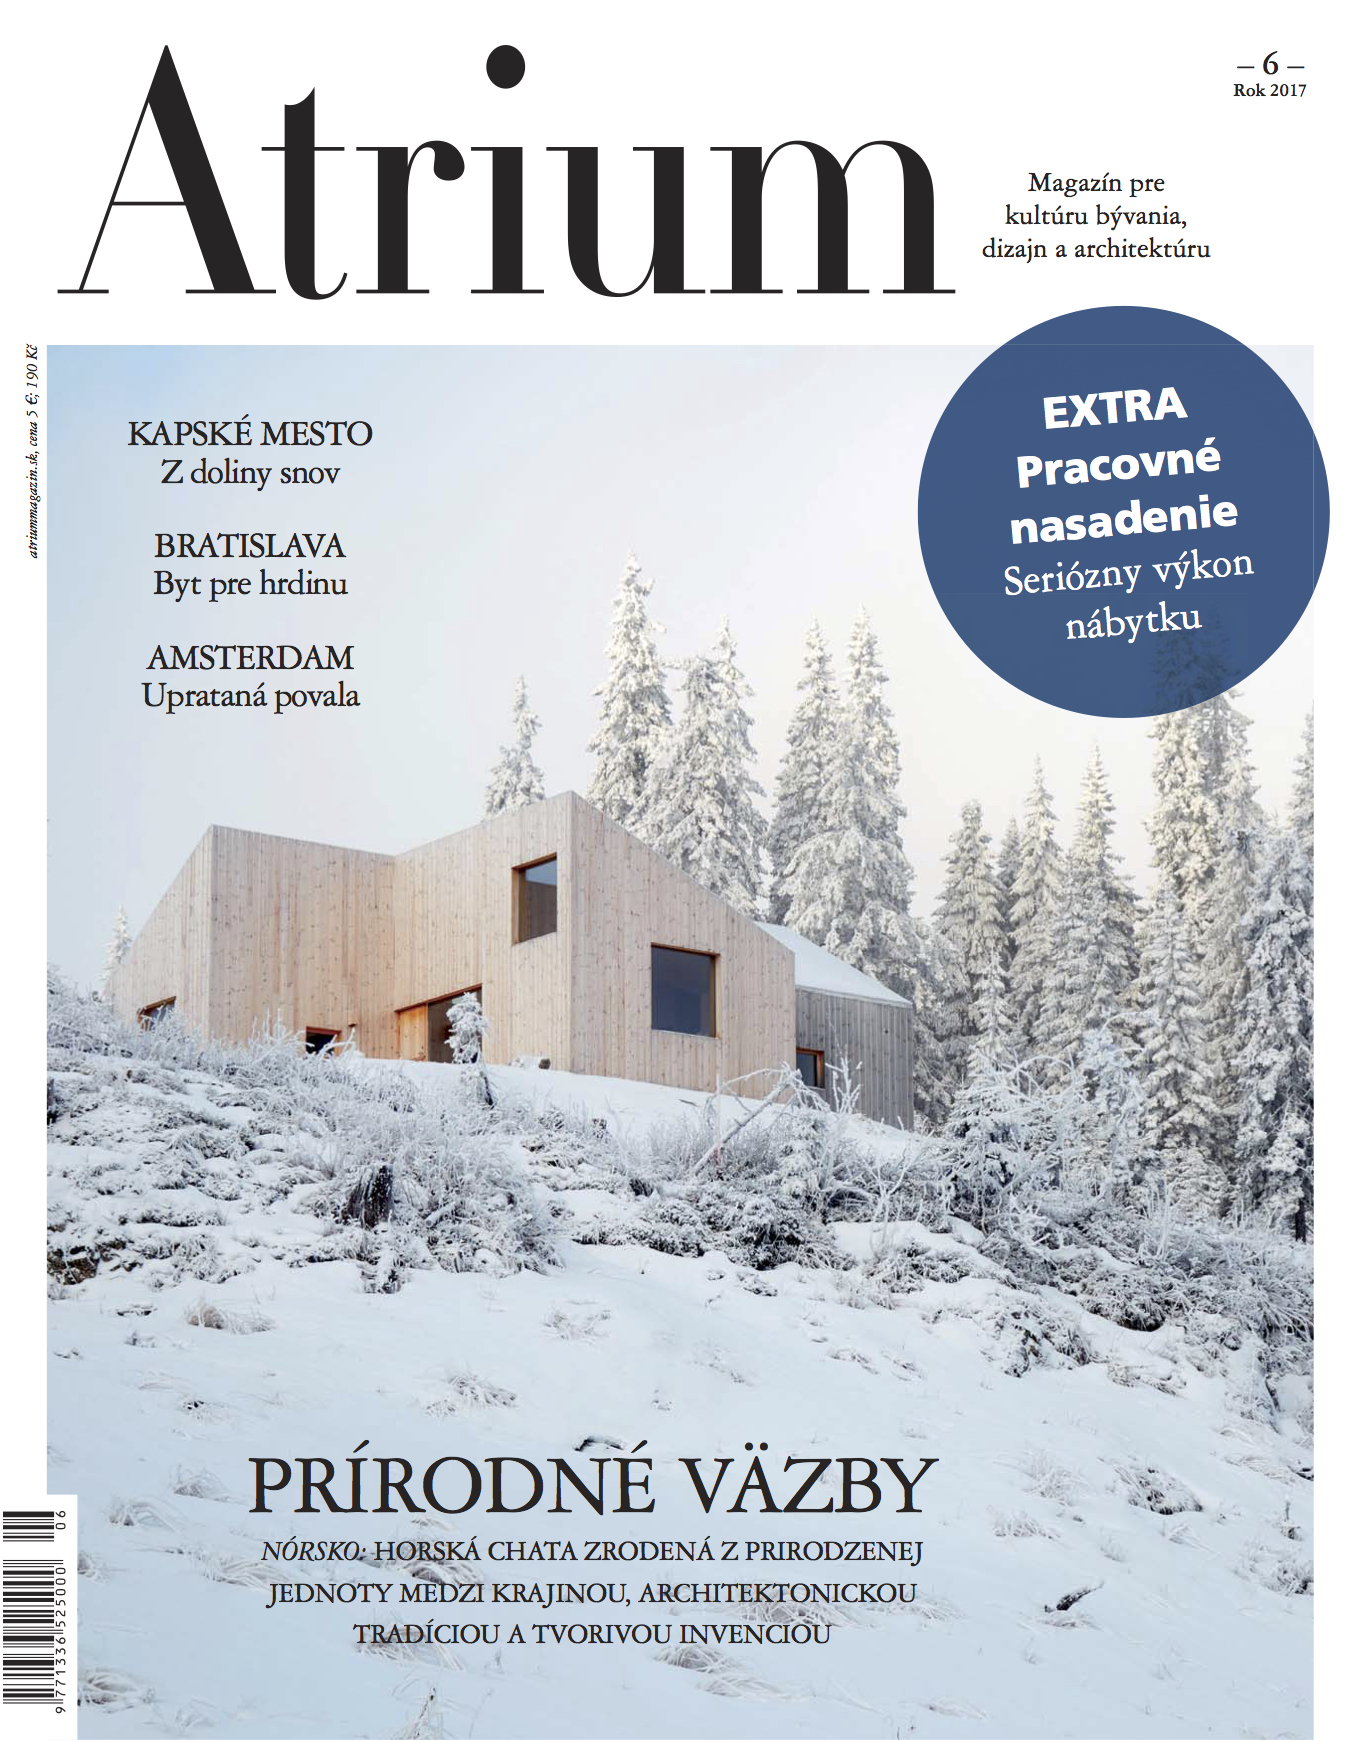 Atrium 2017 06 - Cover.jpg